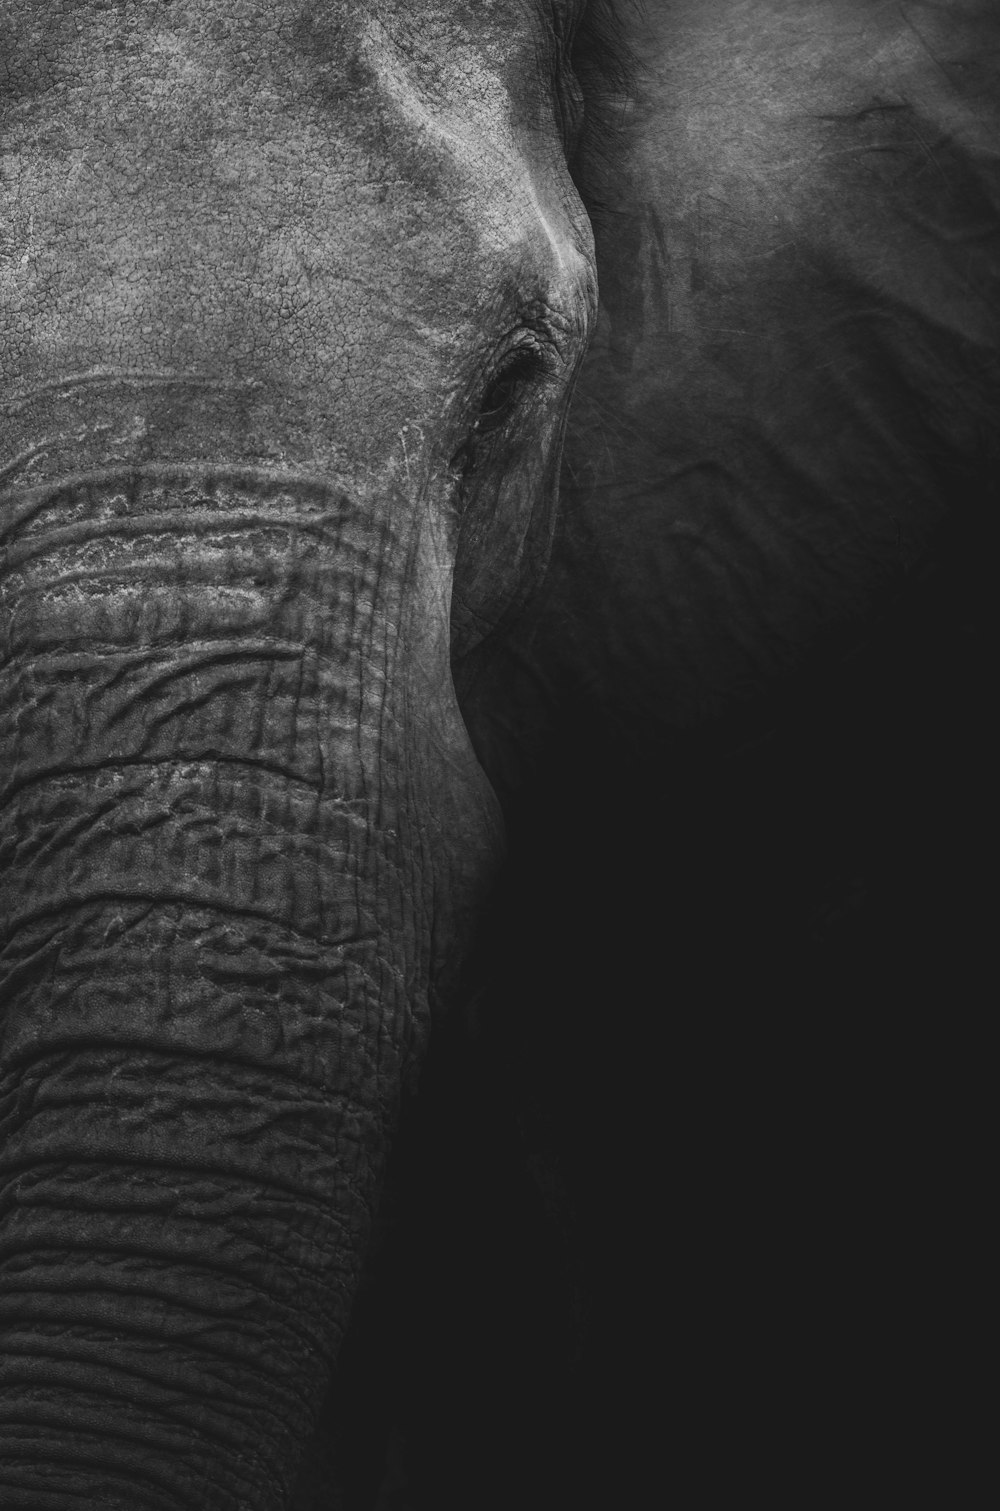 grayscale photography of elephant